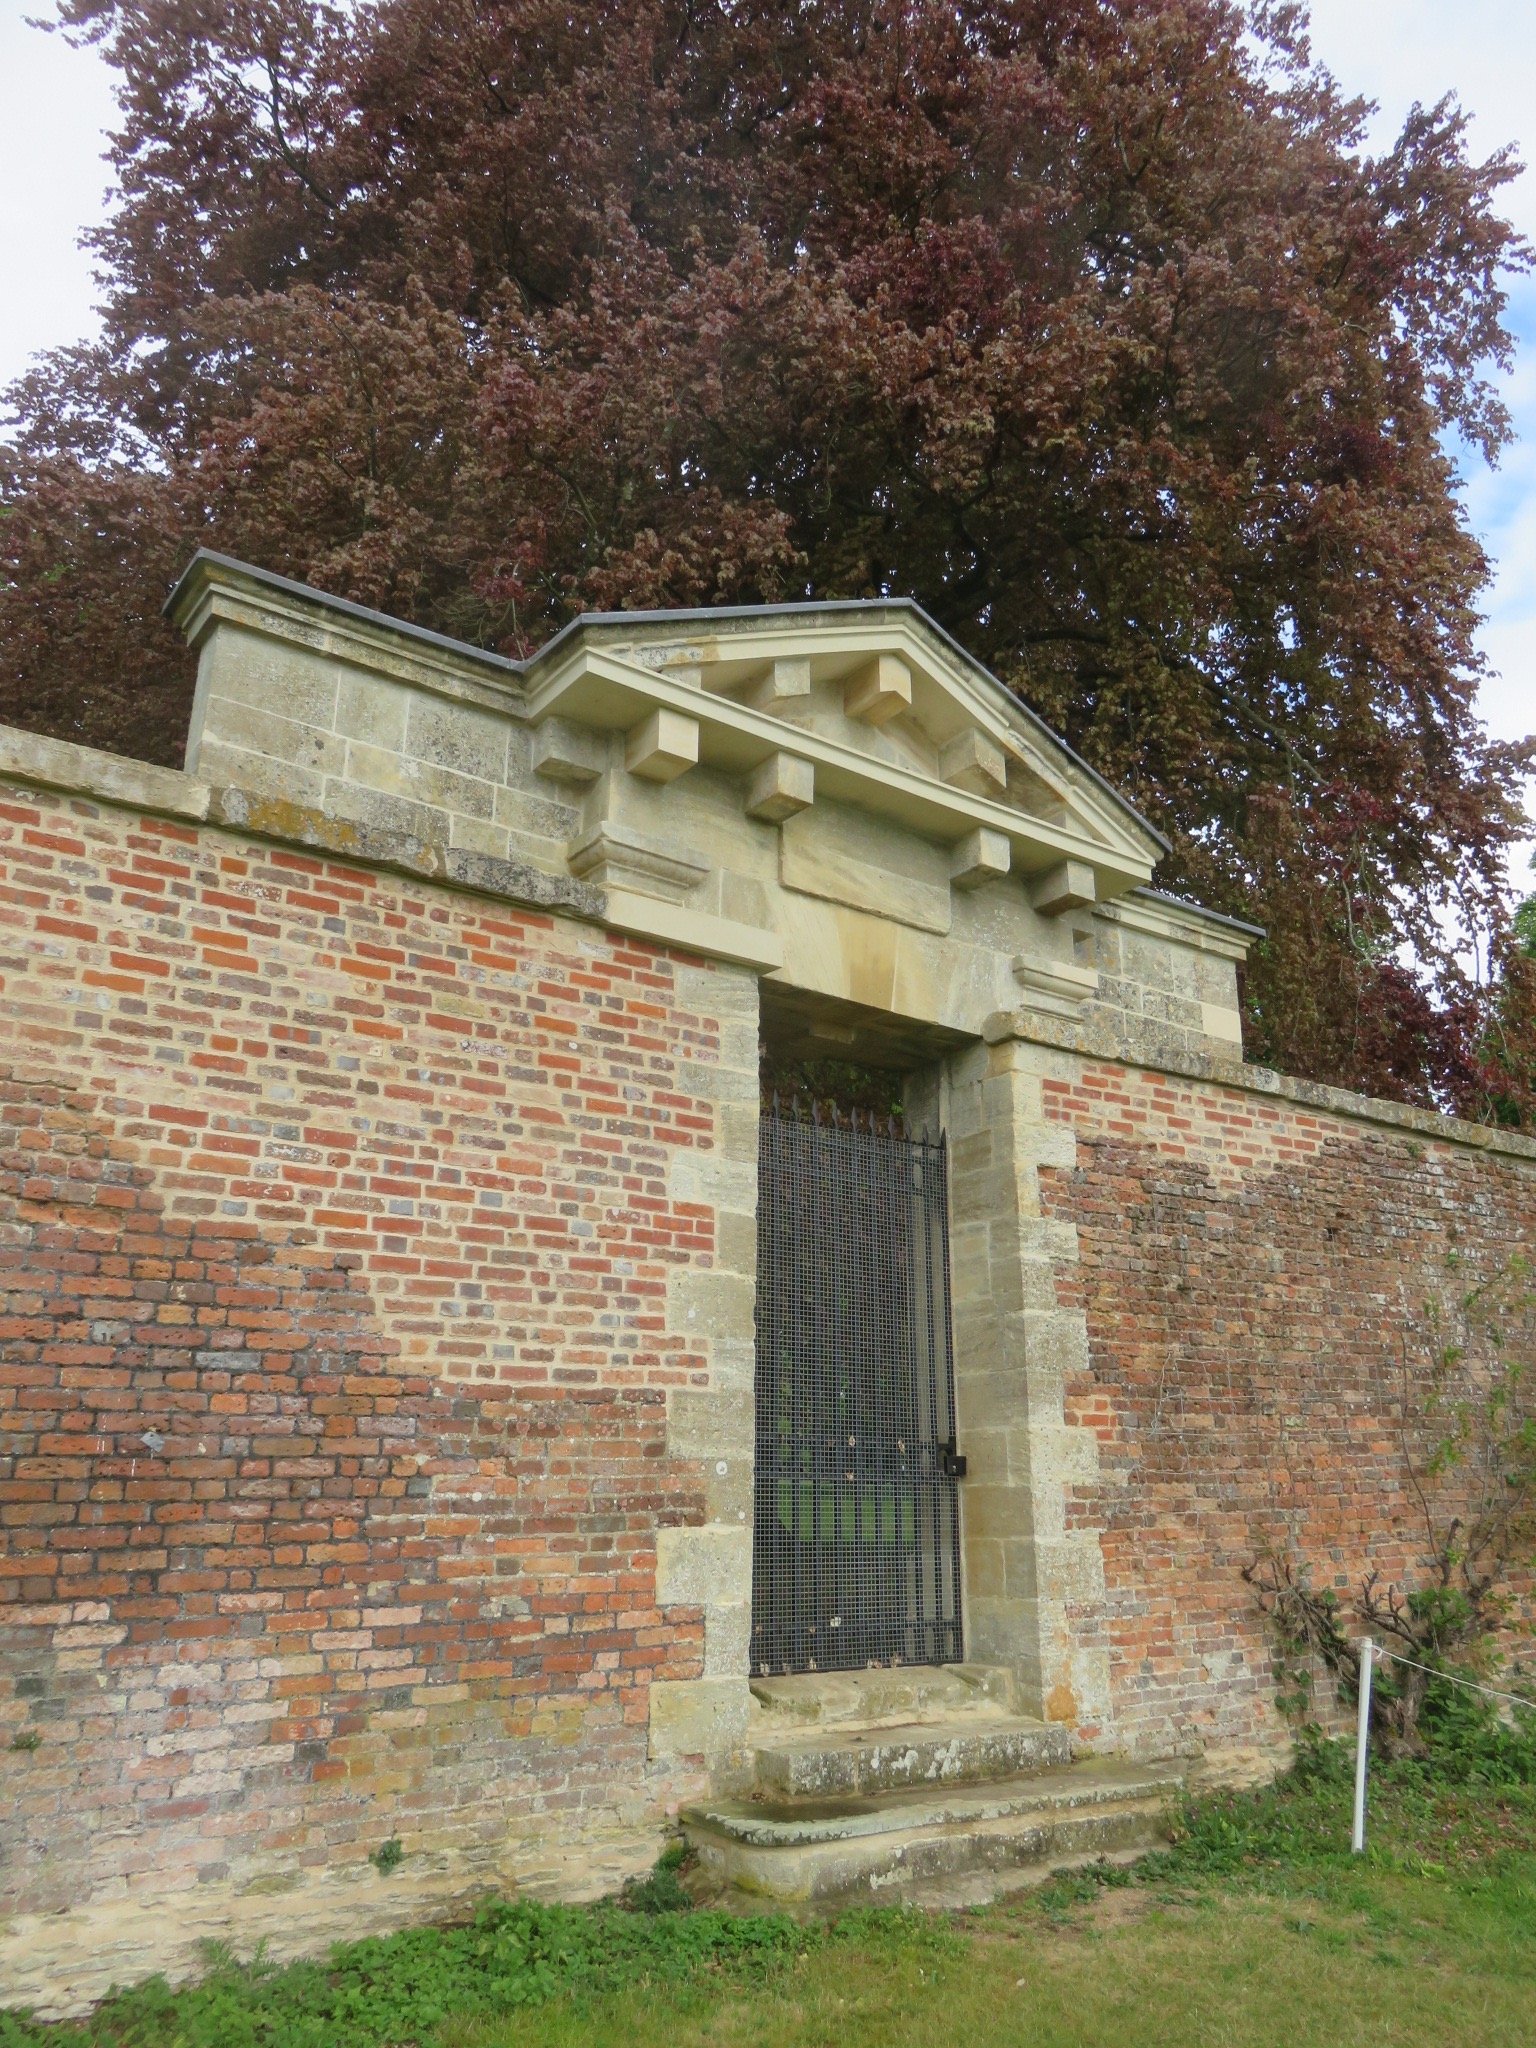 Chamber's Gate, Blenheim Palace